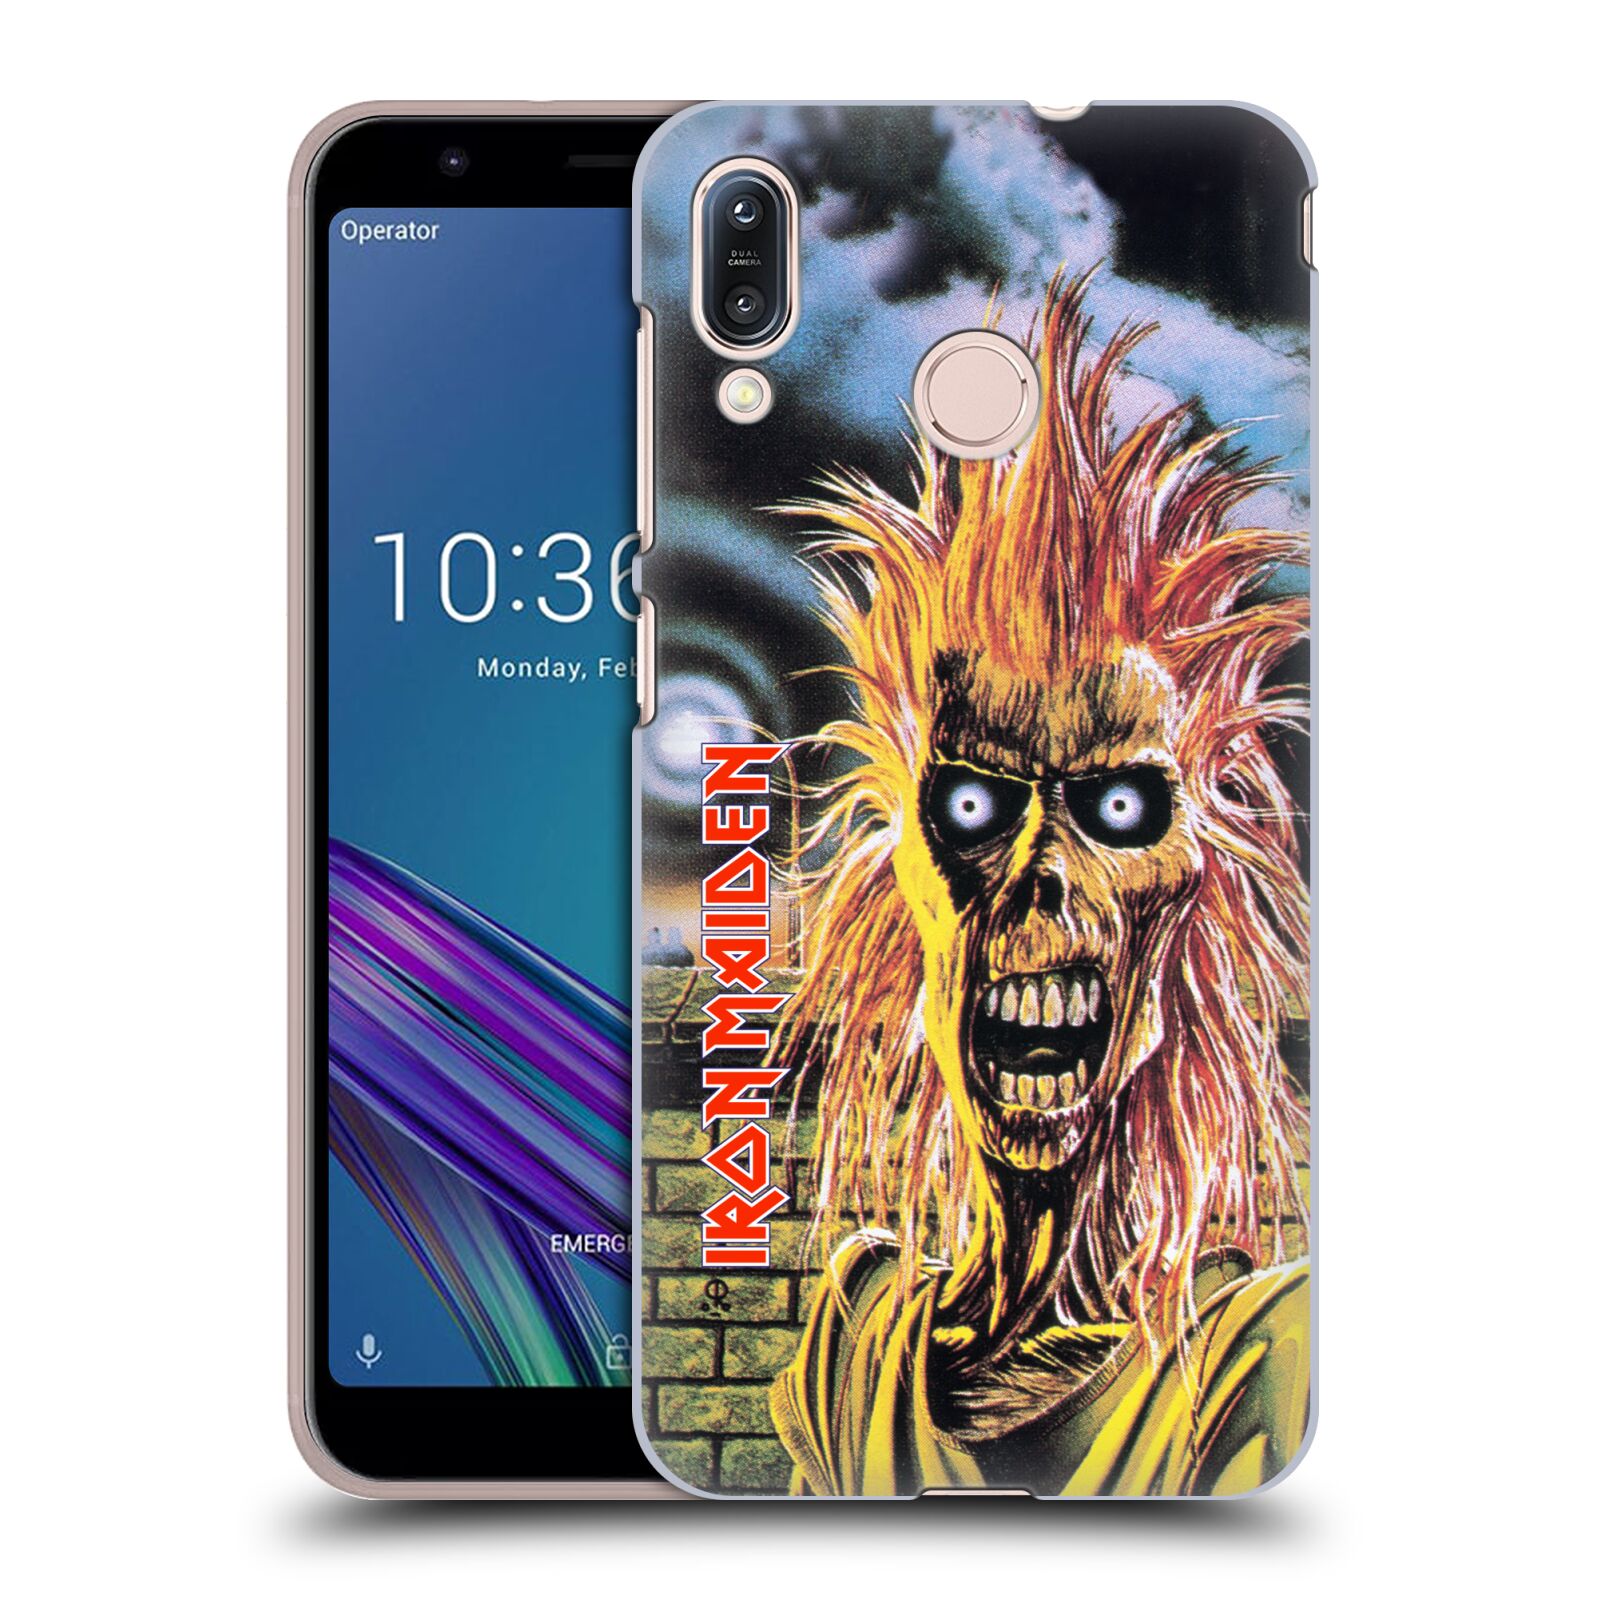 Pouzdro na mobil Asus Zenfone Max M1 (ZB555KL) - HEAD CASE - Heavymetalová skupina Iron Maiden punker